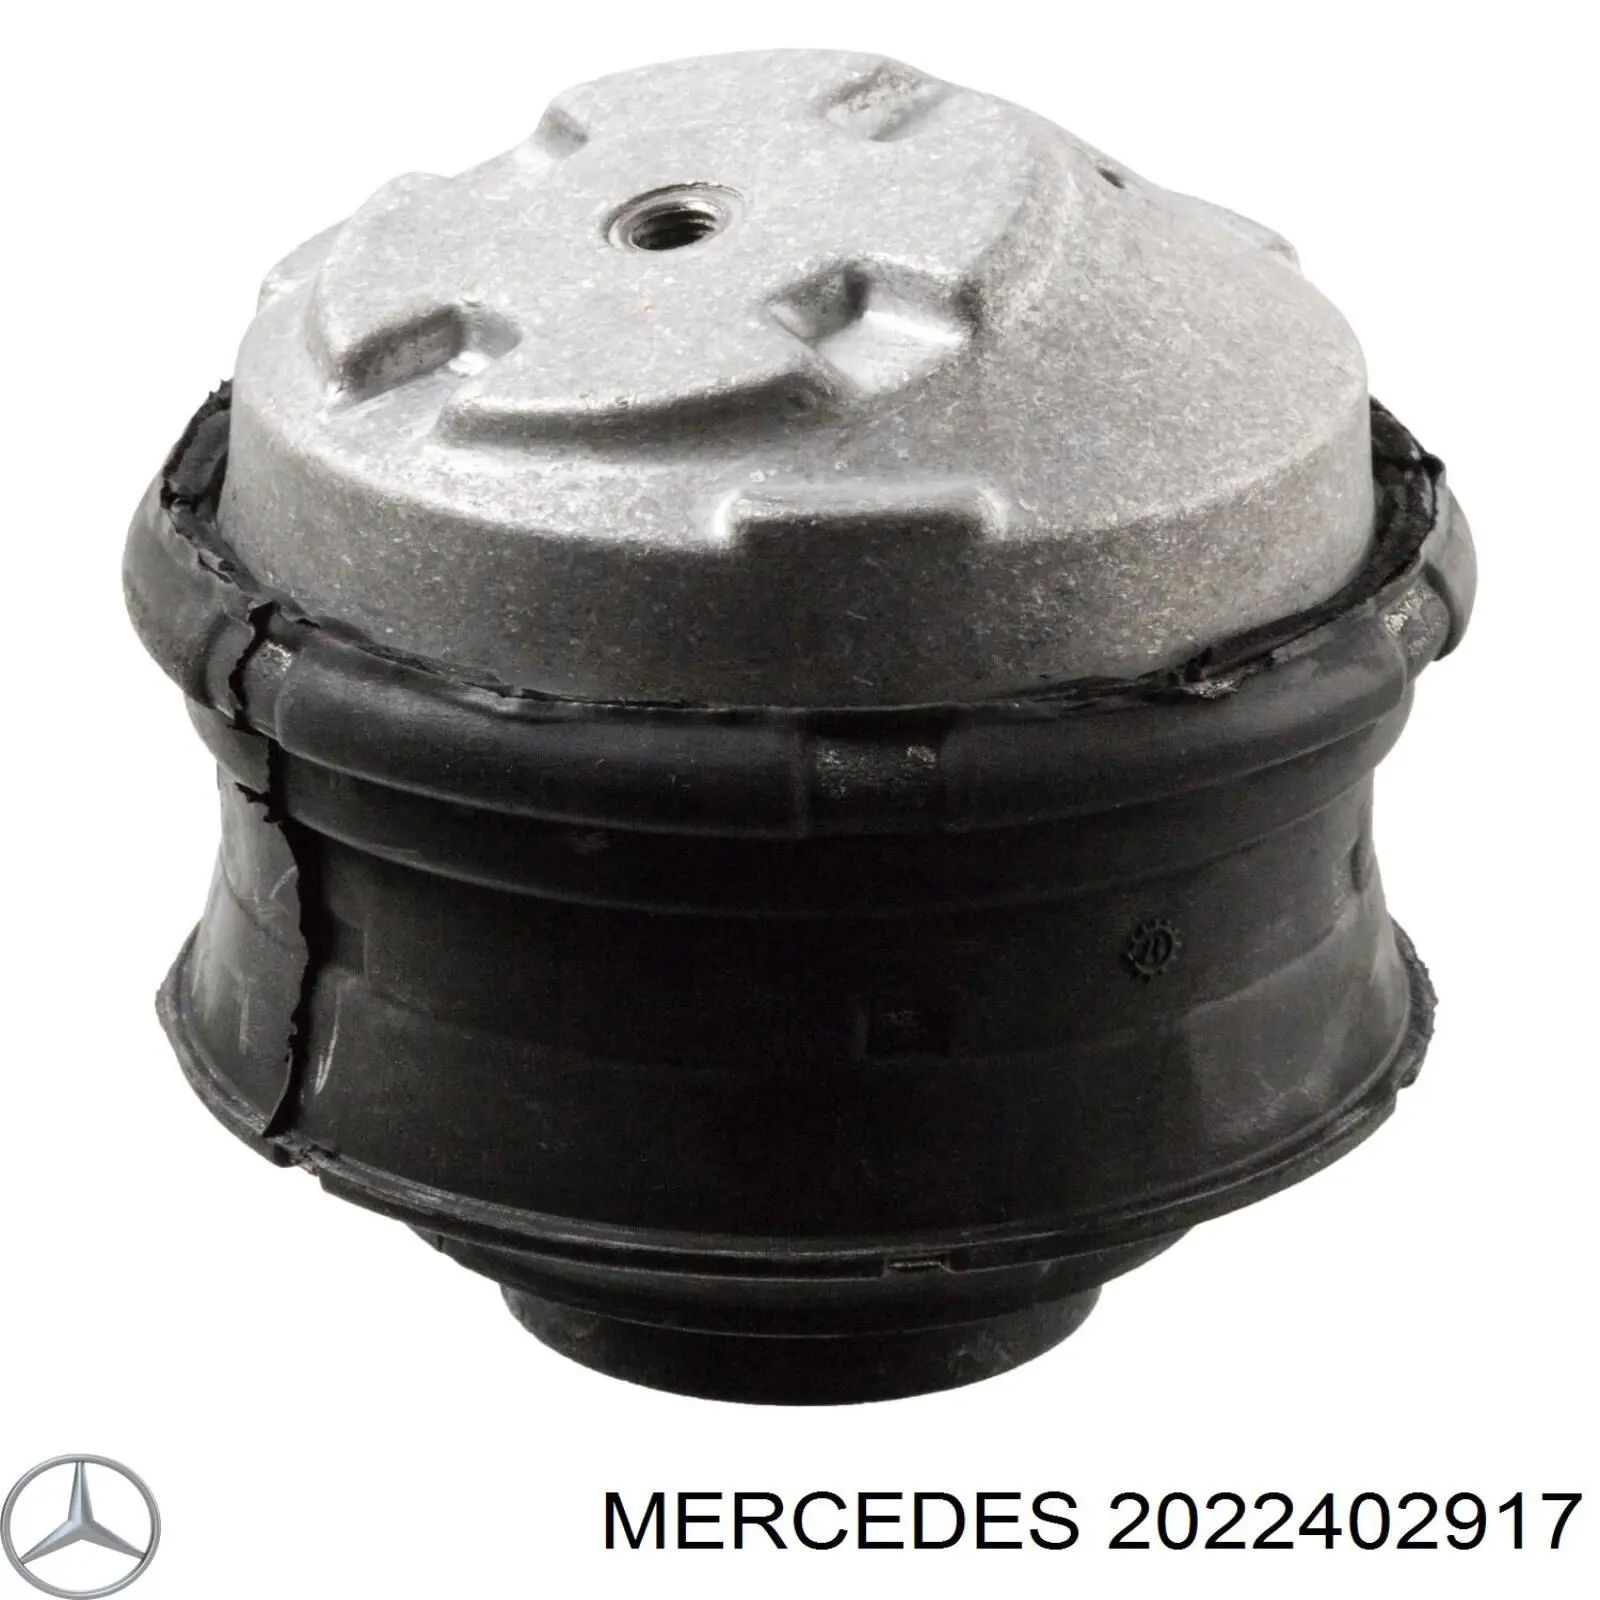 2022402917 Mercedes подушка (опора двигателя левая/правая)